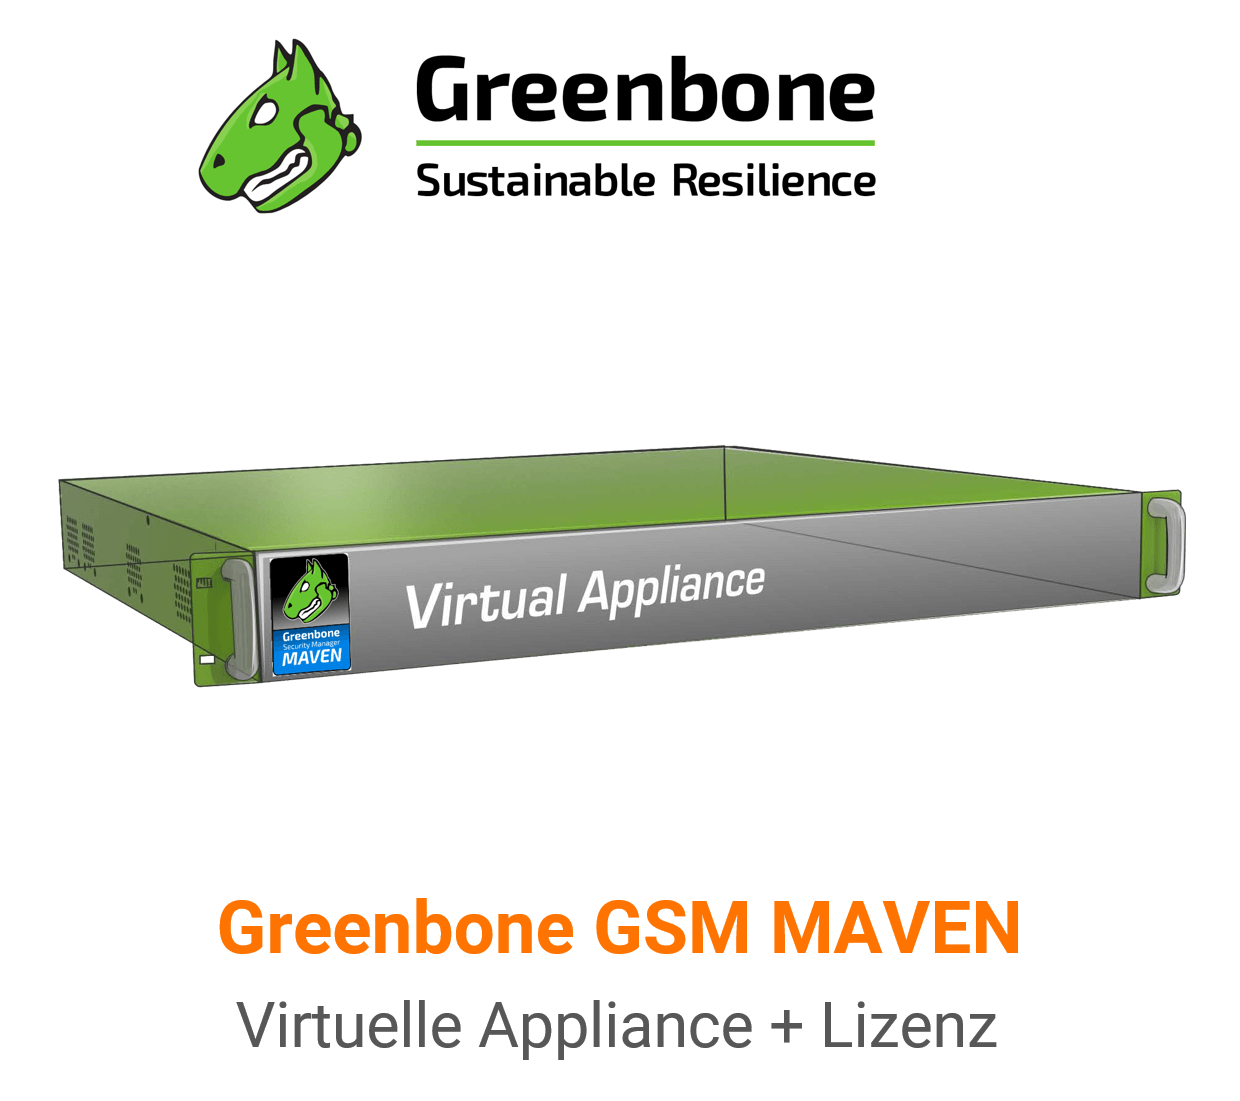 Greenbone GSM MAVEN